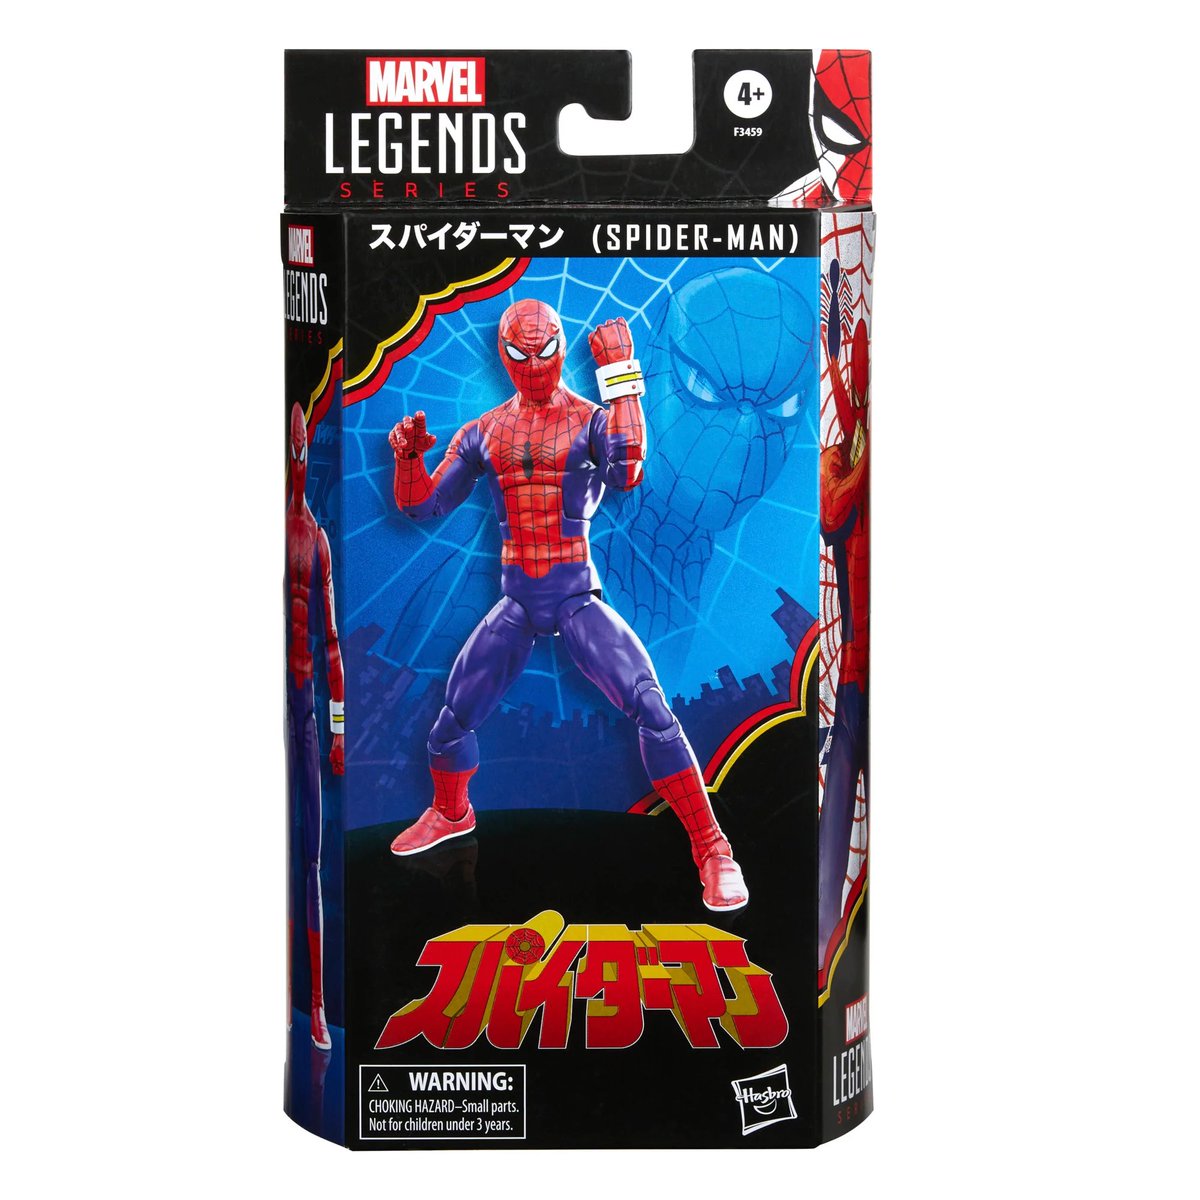 RT @razzle1337: Marvel Legends Series 60th Anniversary Japanese Spider-Man

$27.99

https://t.co/aafKK28ab7 https://t.co/8ujp5Ghl2f